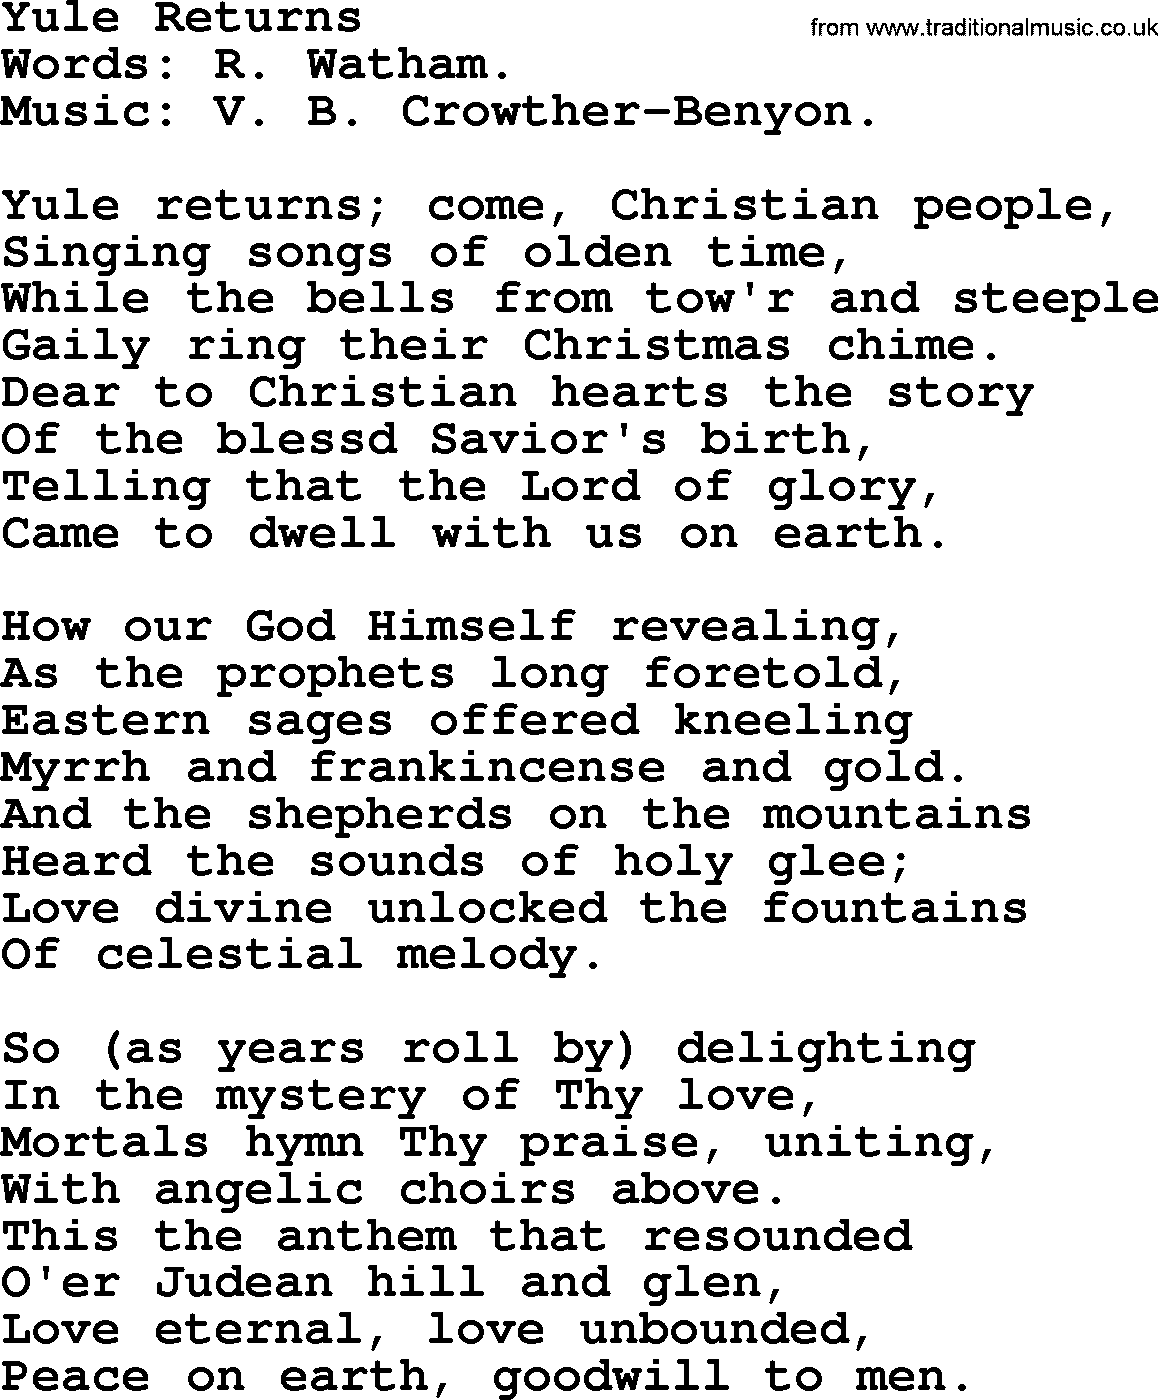 Christmas Hymns, Carols and Songs, title: Yule Returns, lyrics with PDF